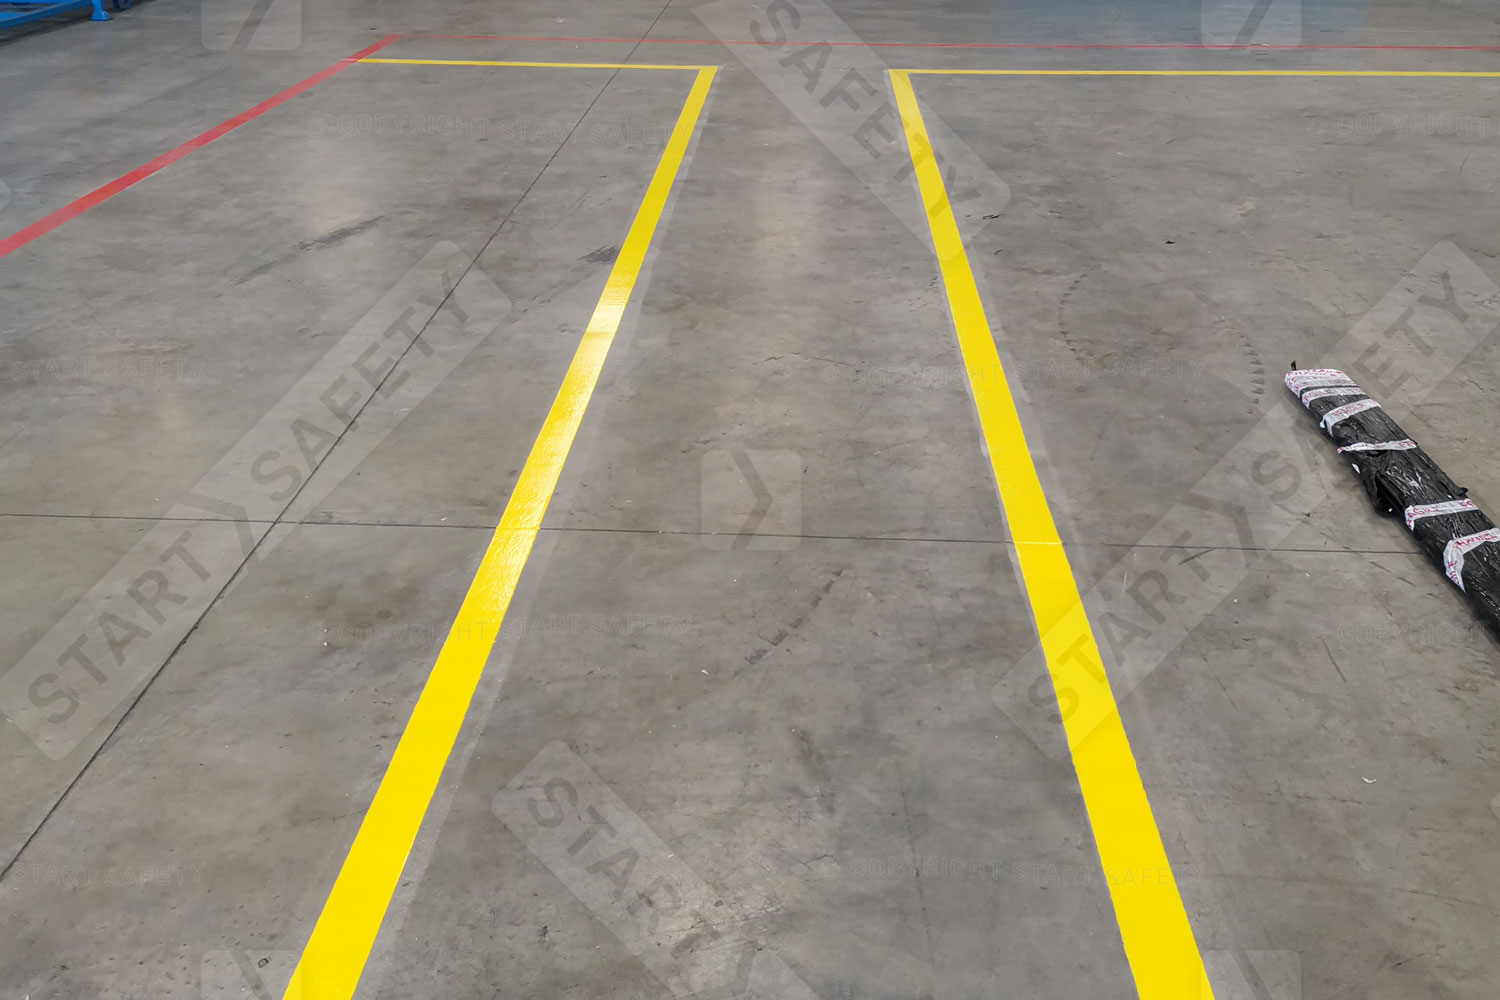 Factory floor with walkways marked